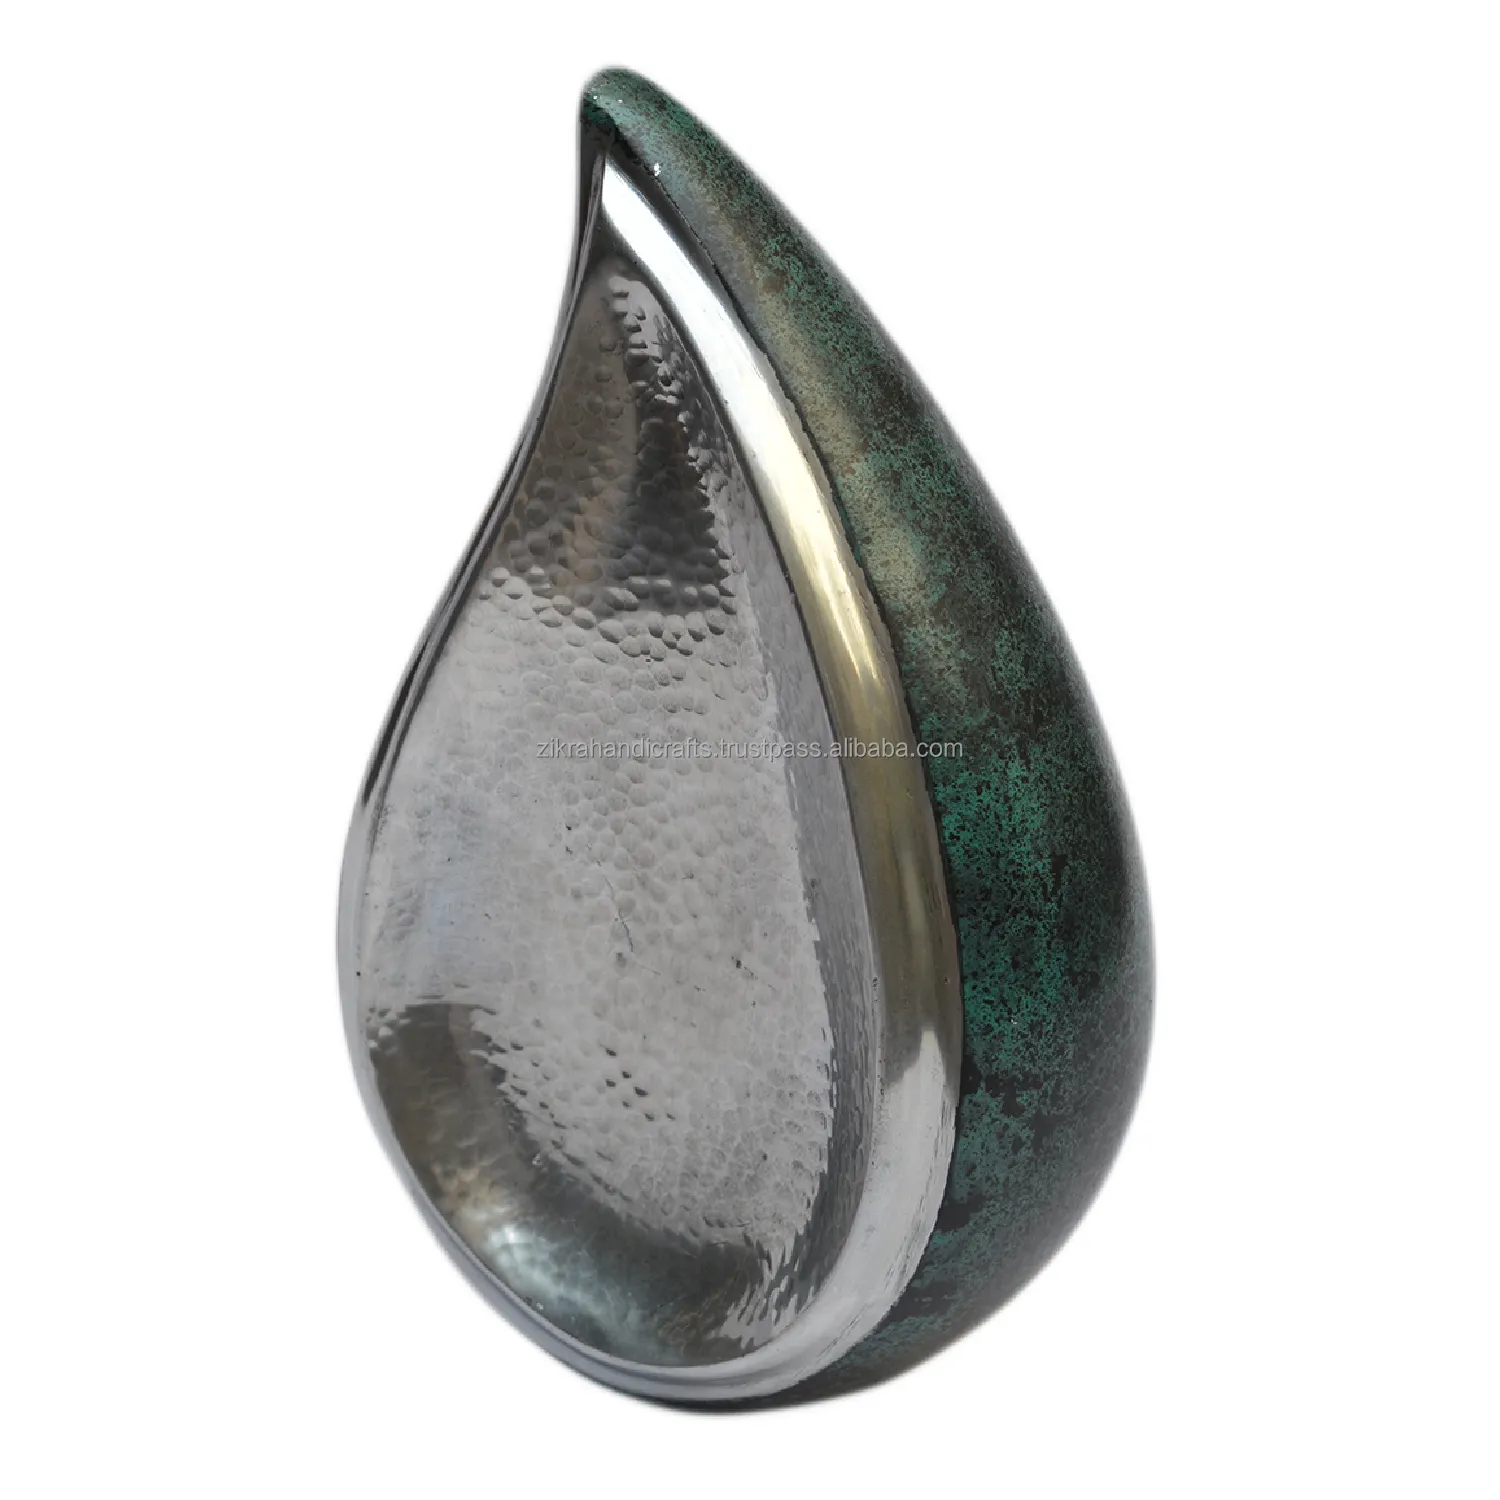 Best Quality Metal Teardrop Memorial Tear Drop Urns With Metal Combo Design Home Decor Best Funeral Supplies Wholesale Design